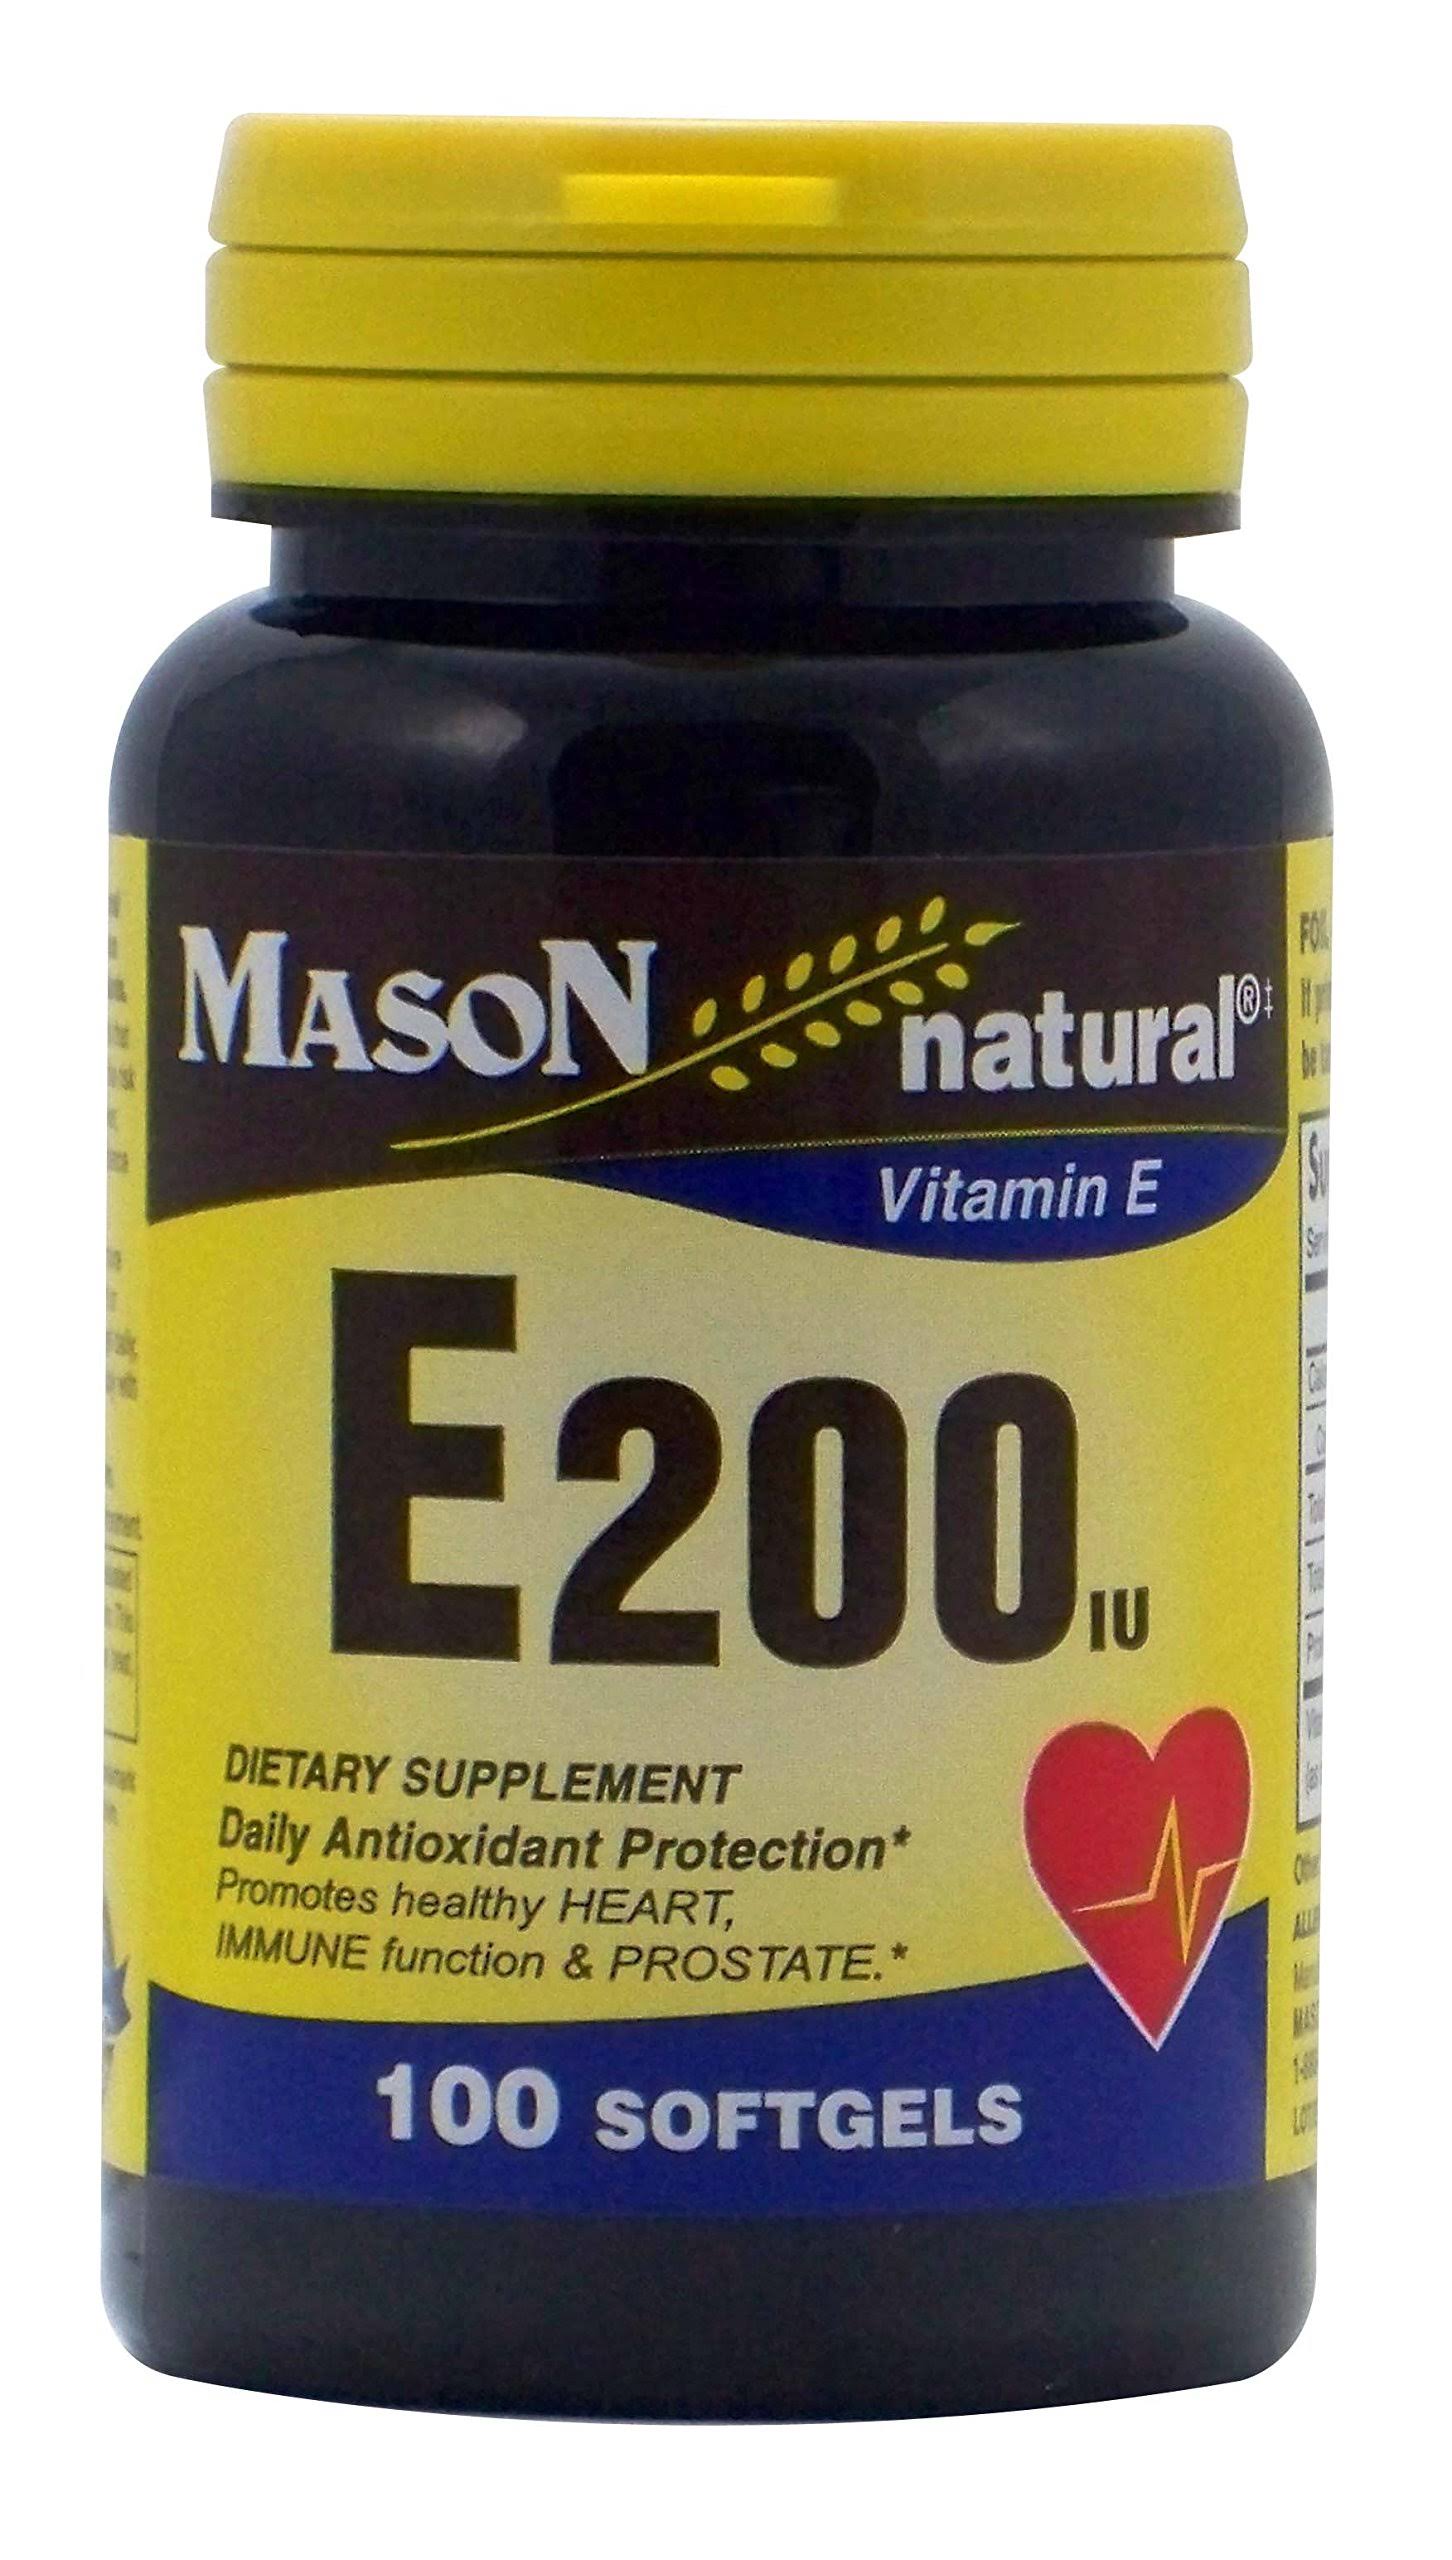 Mason Natural Vitamin E 200iu Dietary Supplement - 100ct